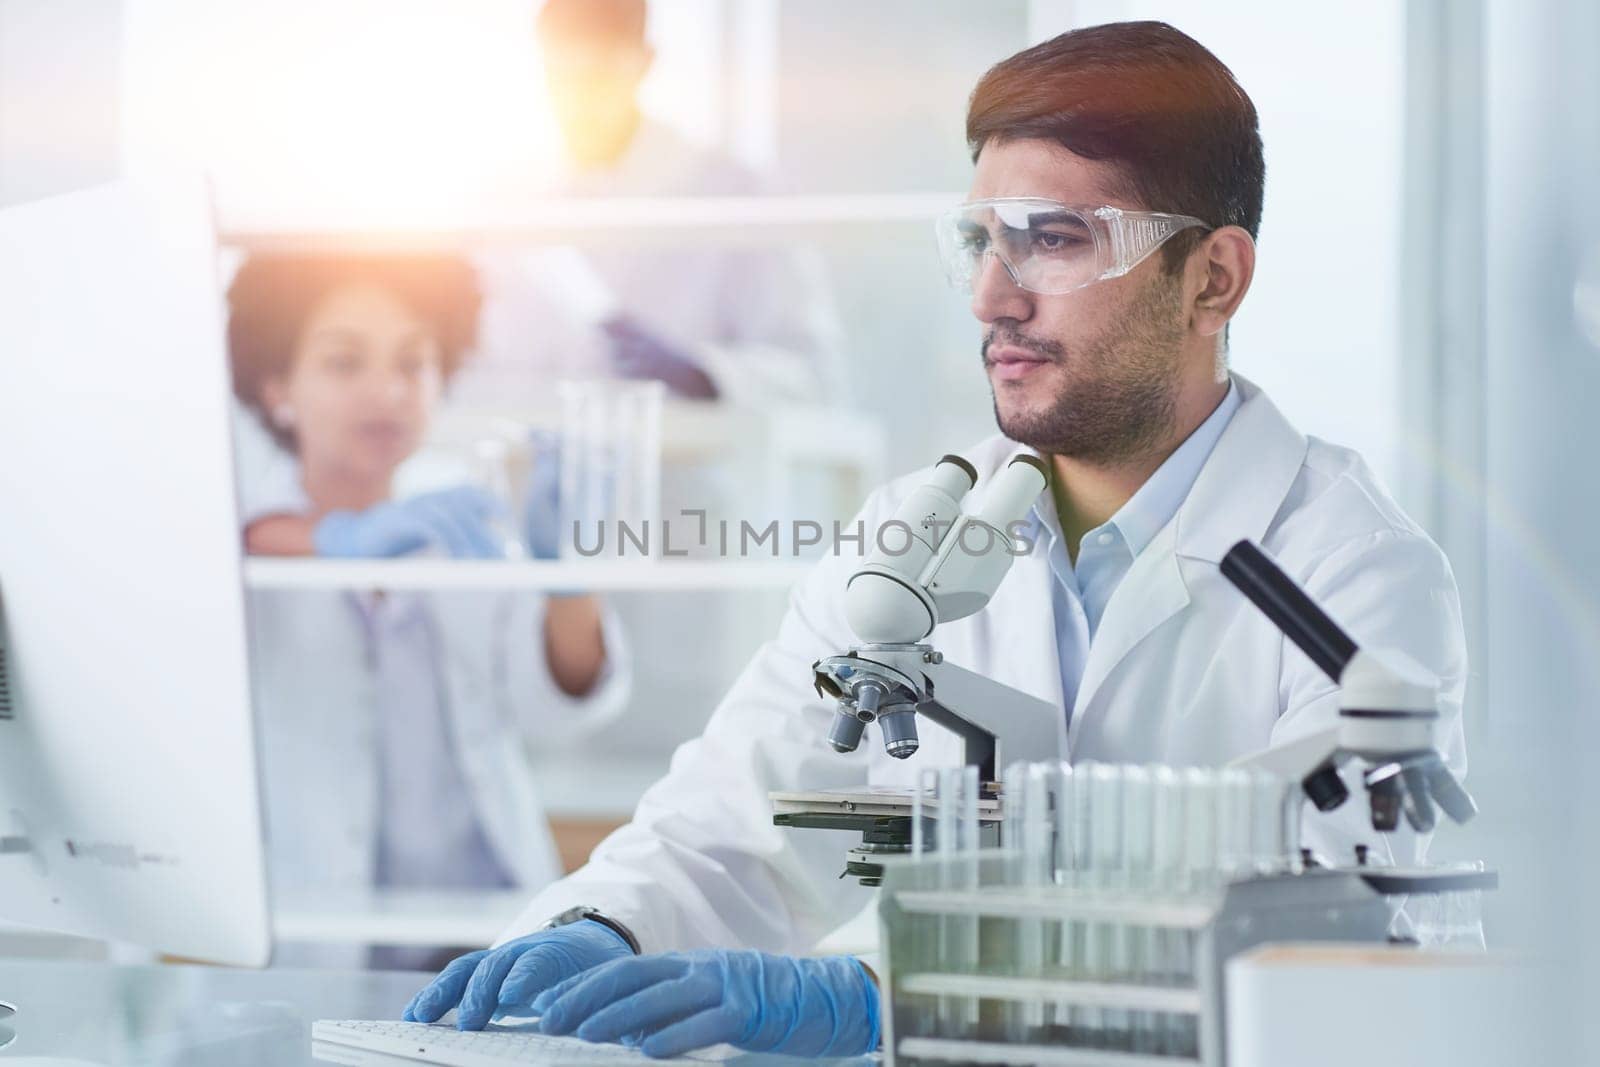 Focused male scientist working in laboratory